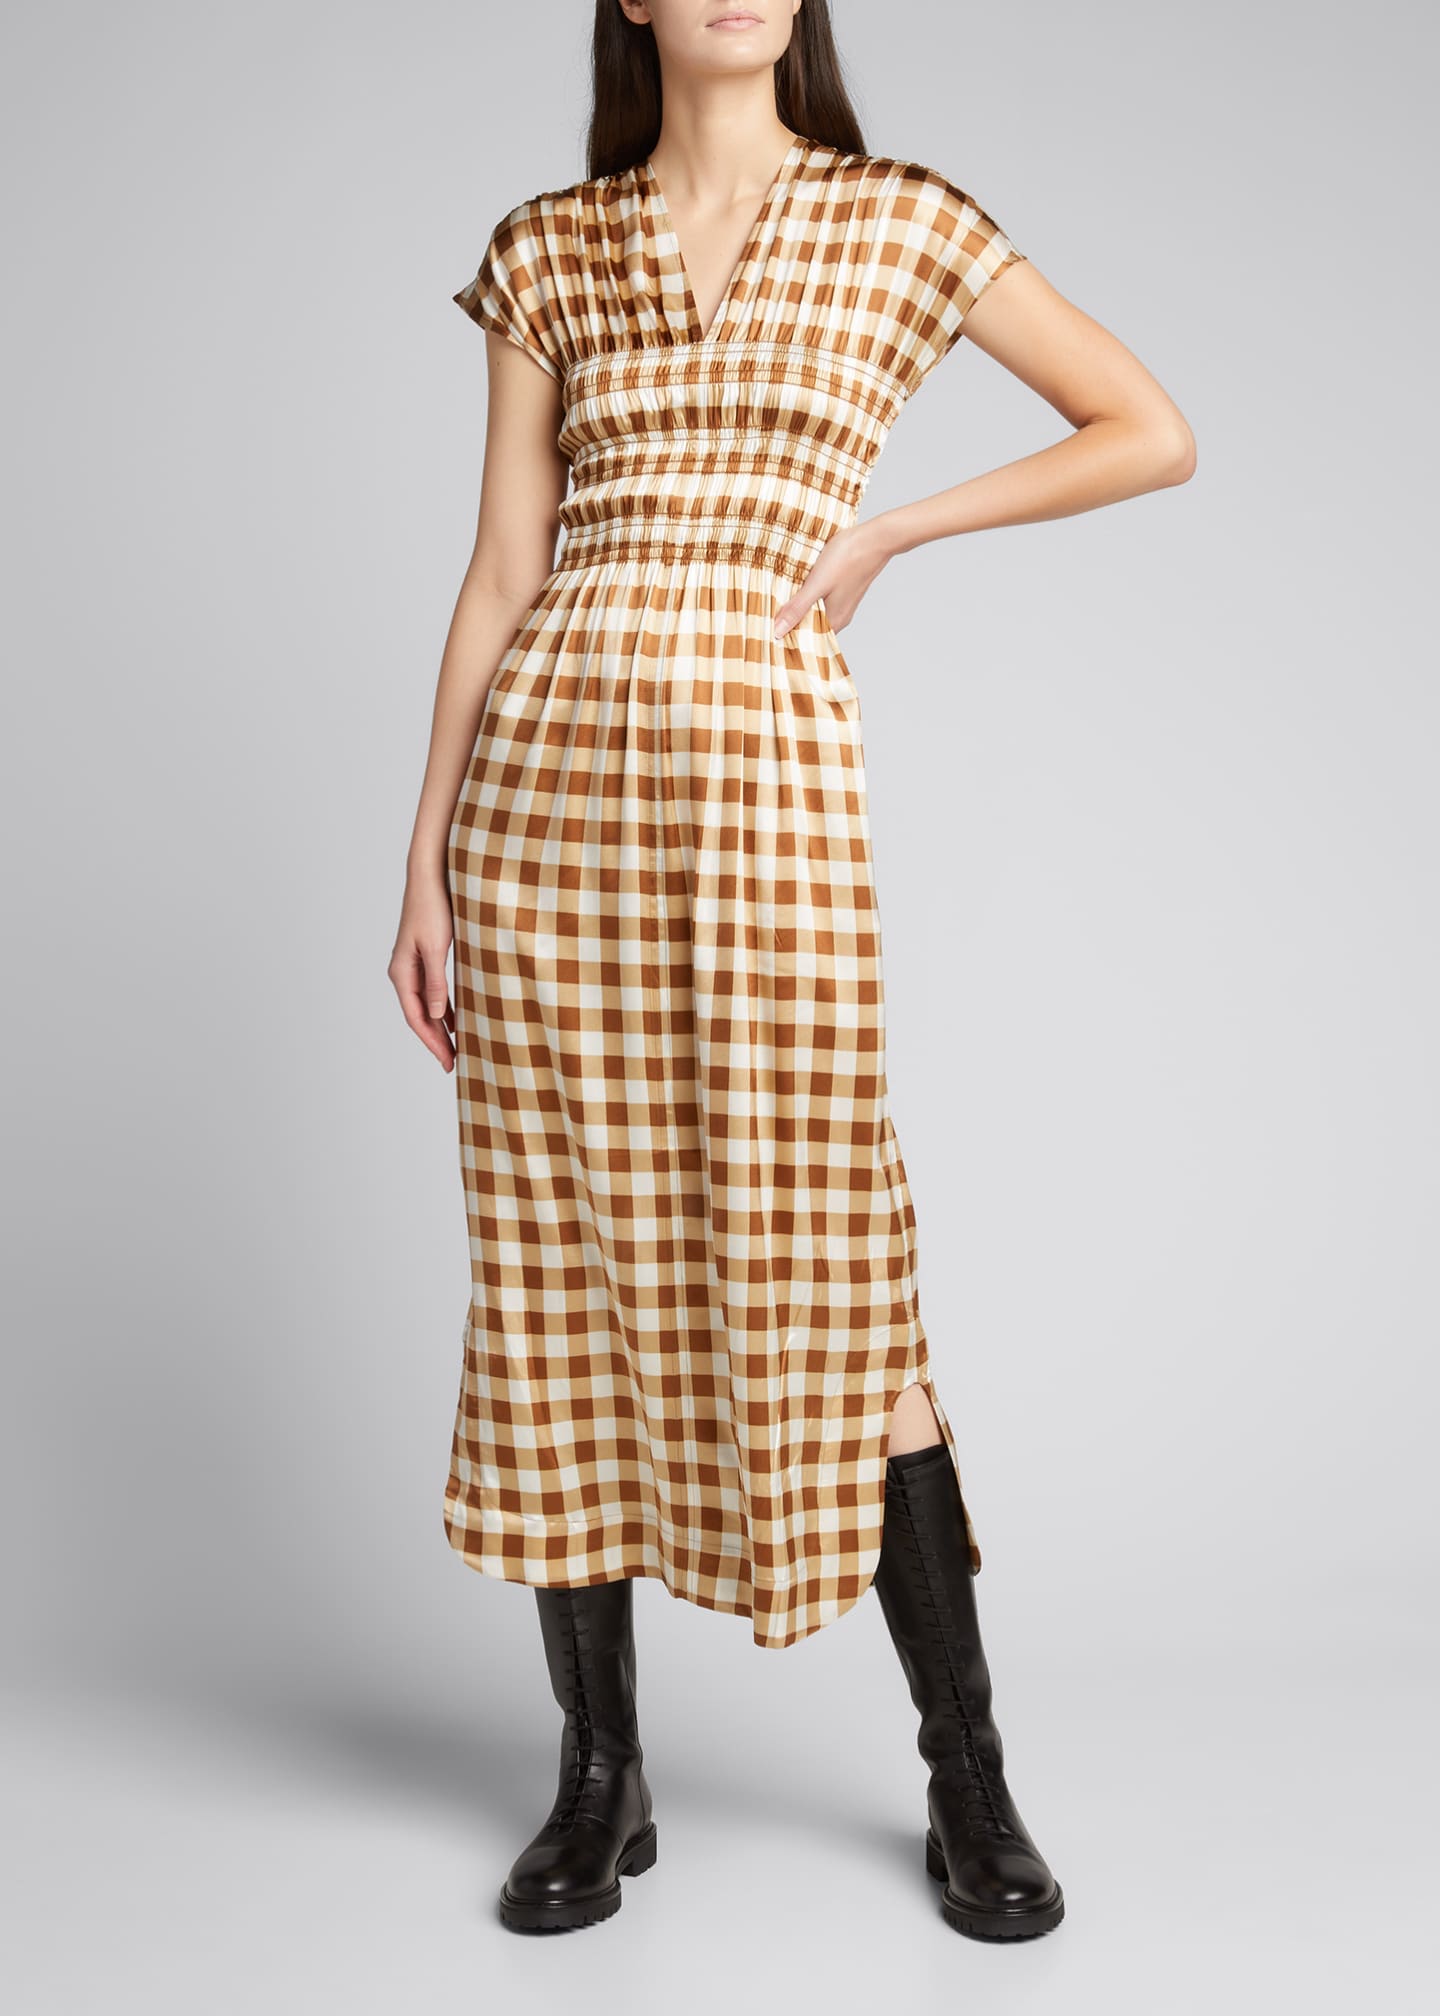 Ganni Gingham Cap-Sleeve Stretch Silk Maxi Dress - Bergdorf Goodman